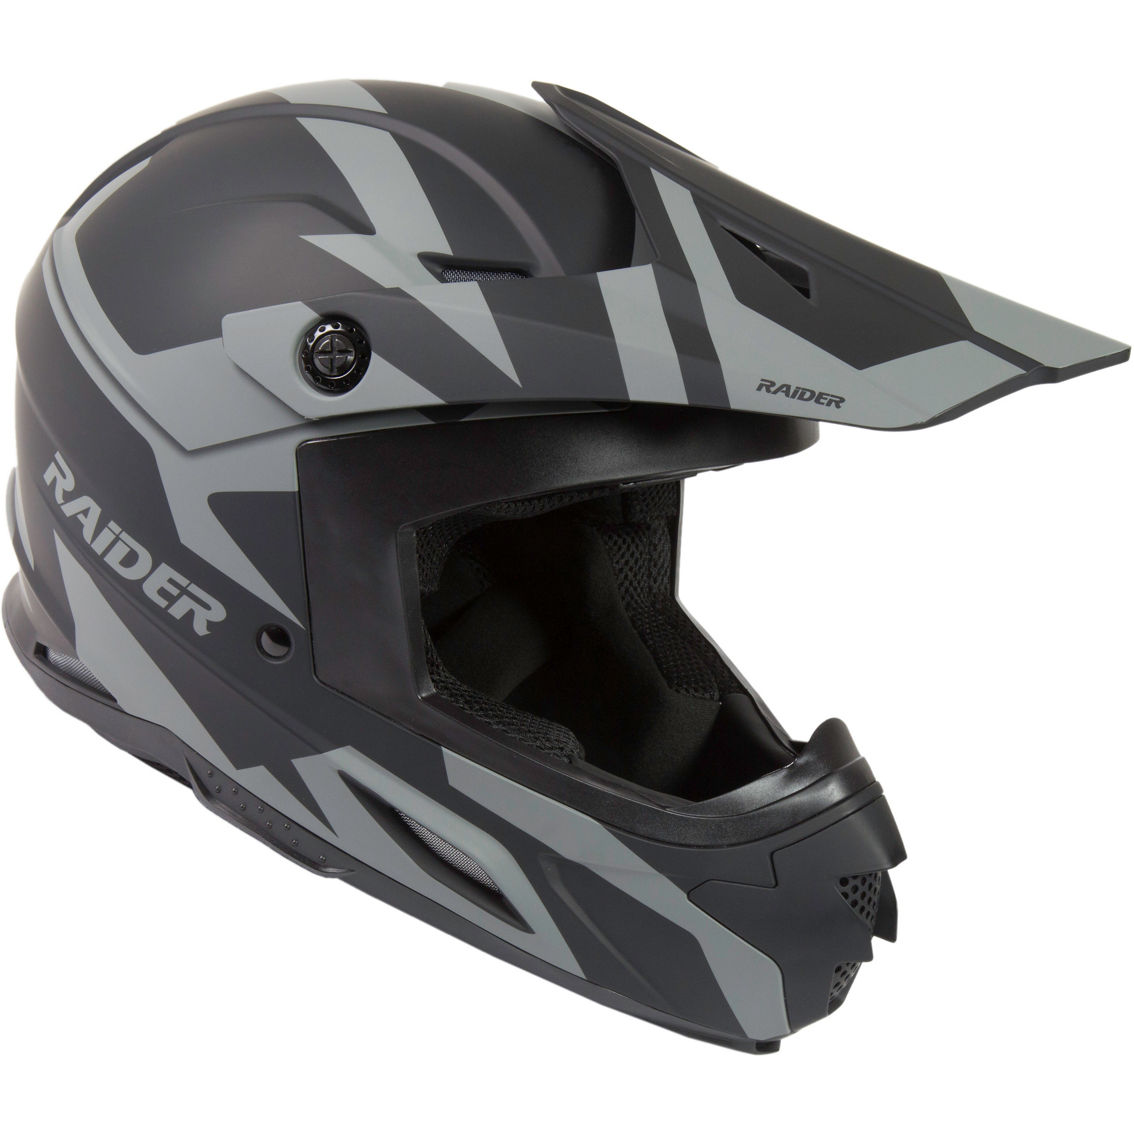 Raider Z7 MX Helmet - Image 3 of 6